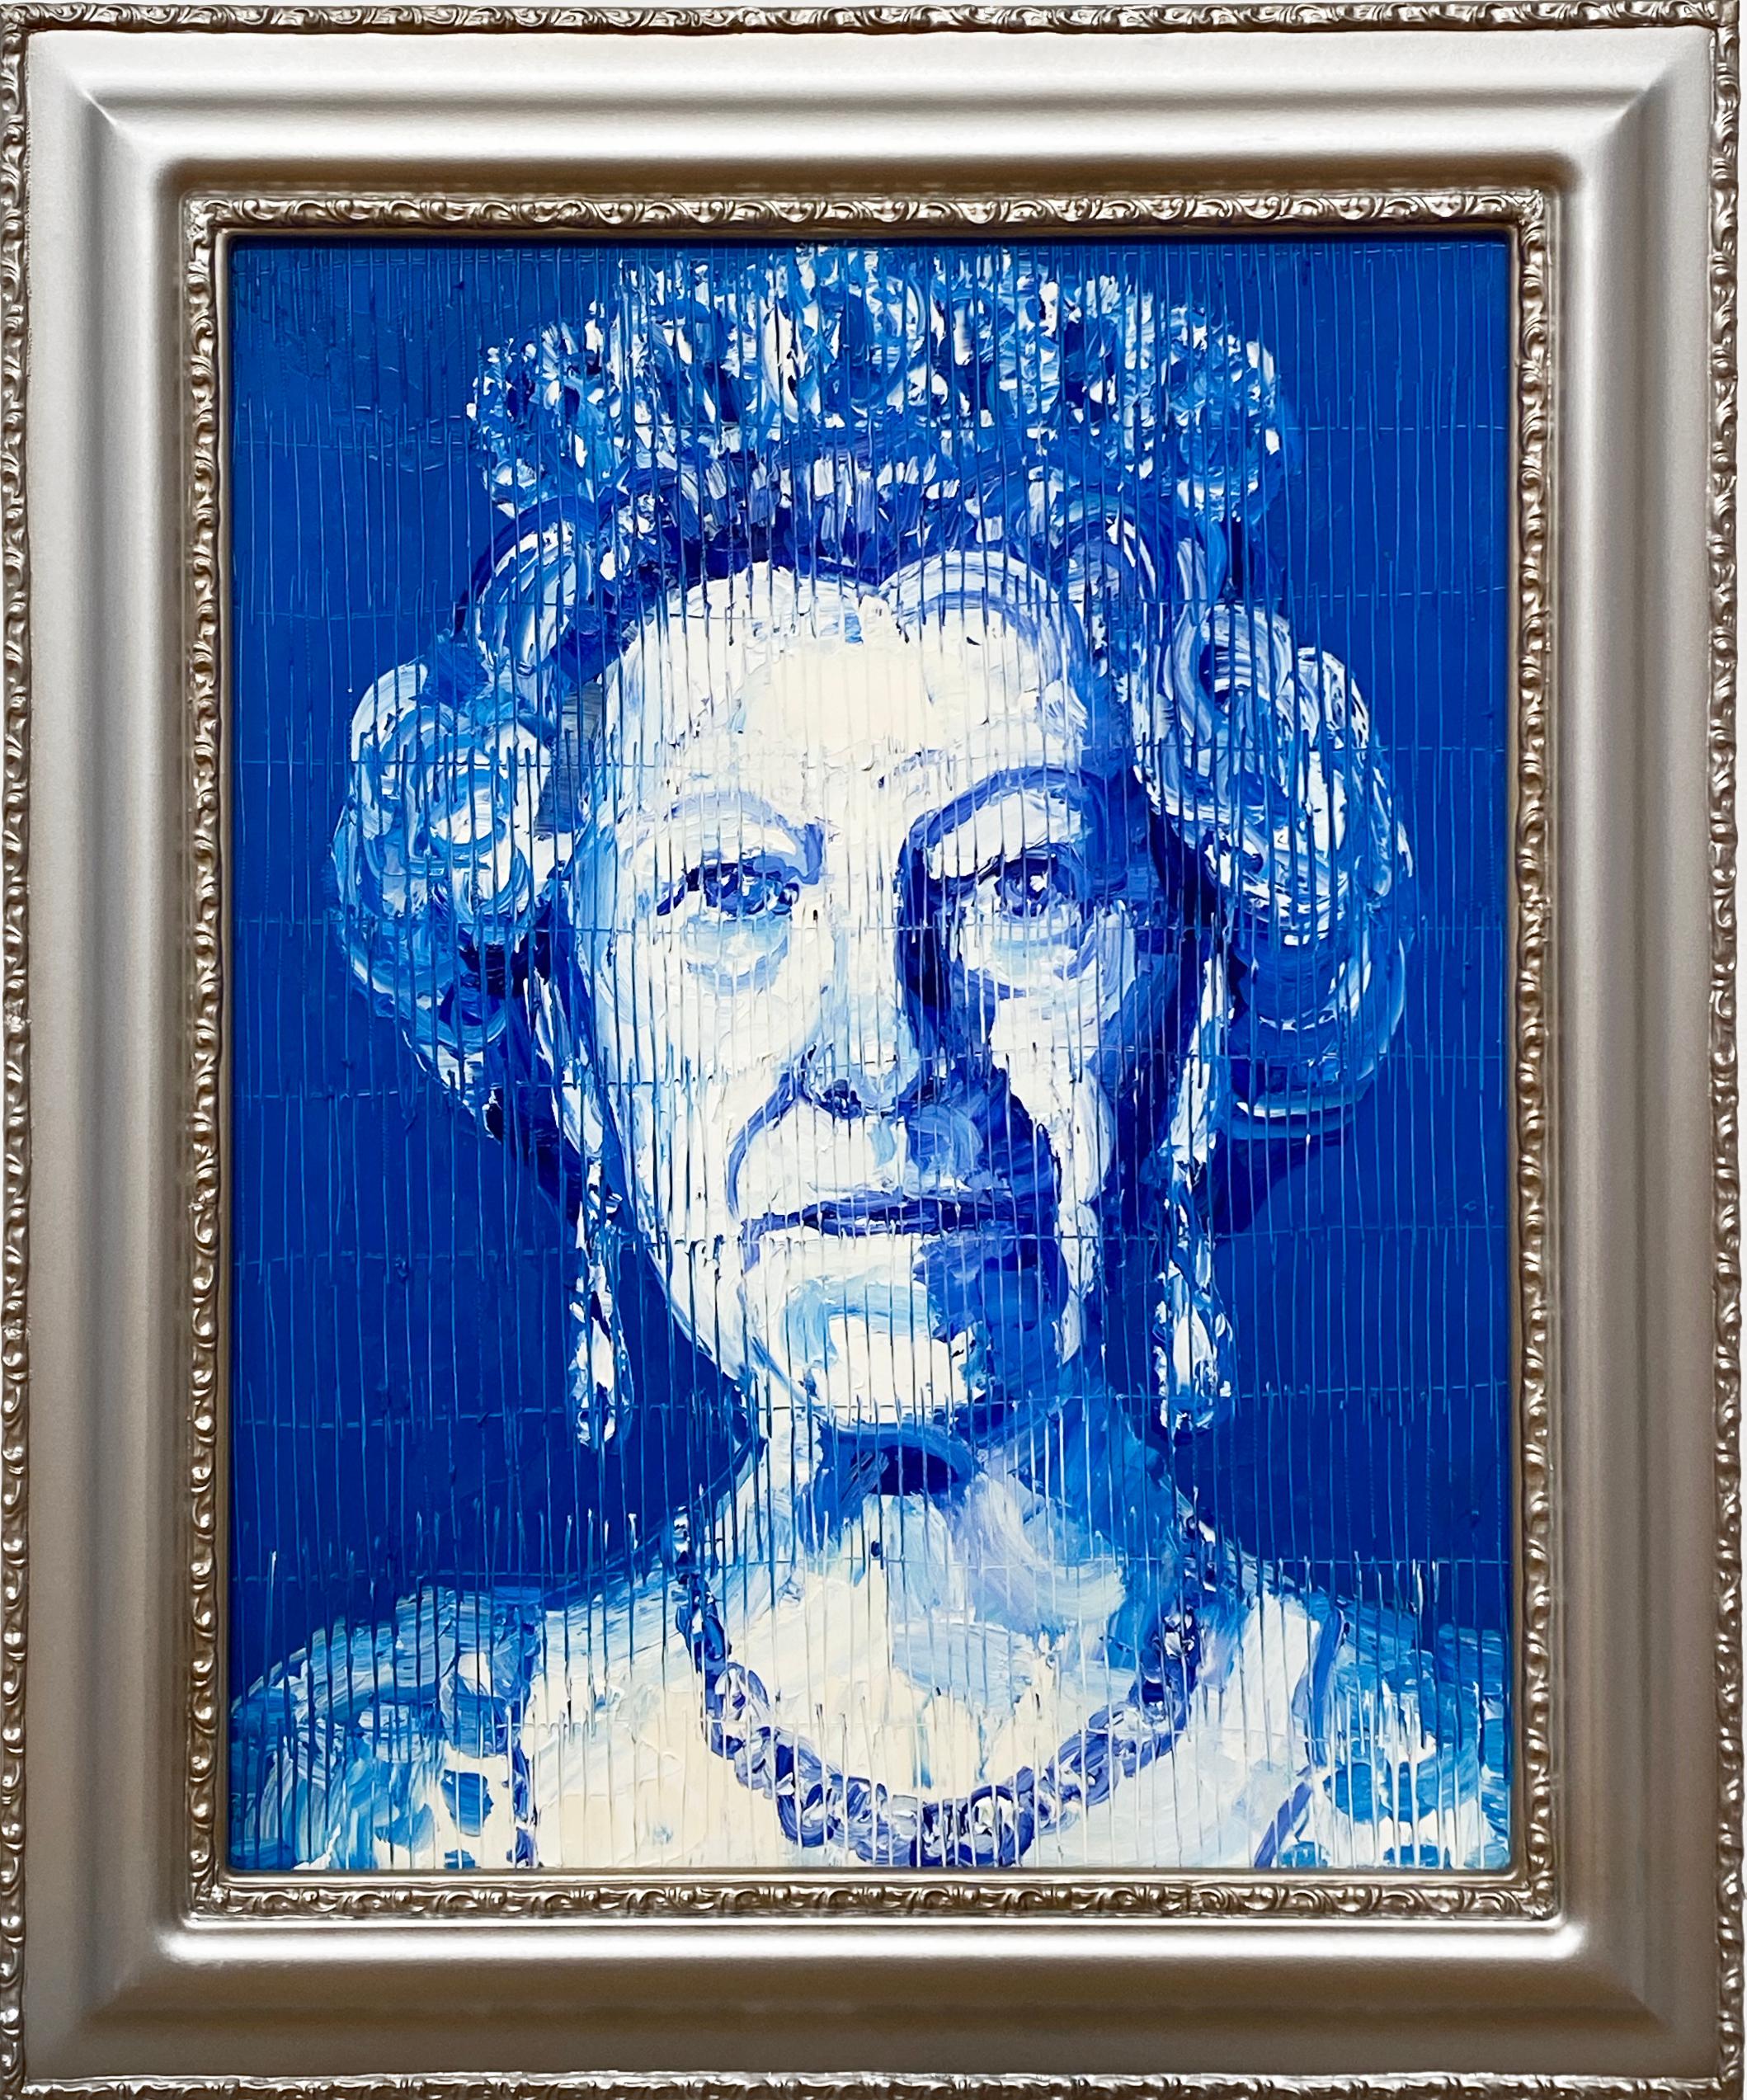 Her Majesty Queen Elizabeth - Painting by Hunt Slonem